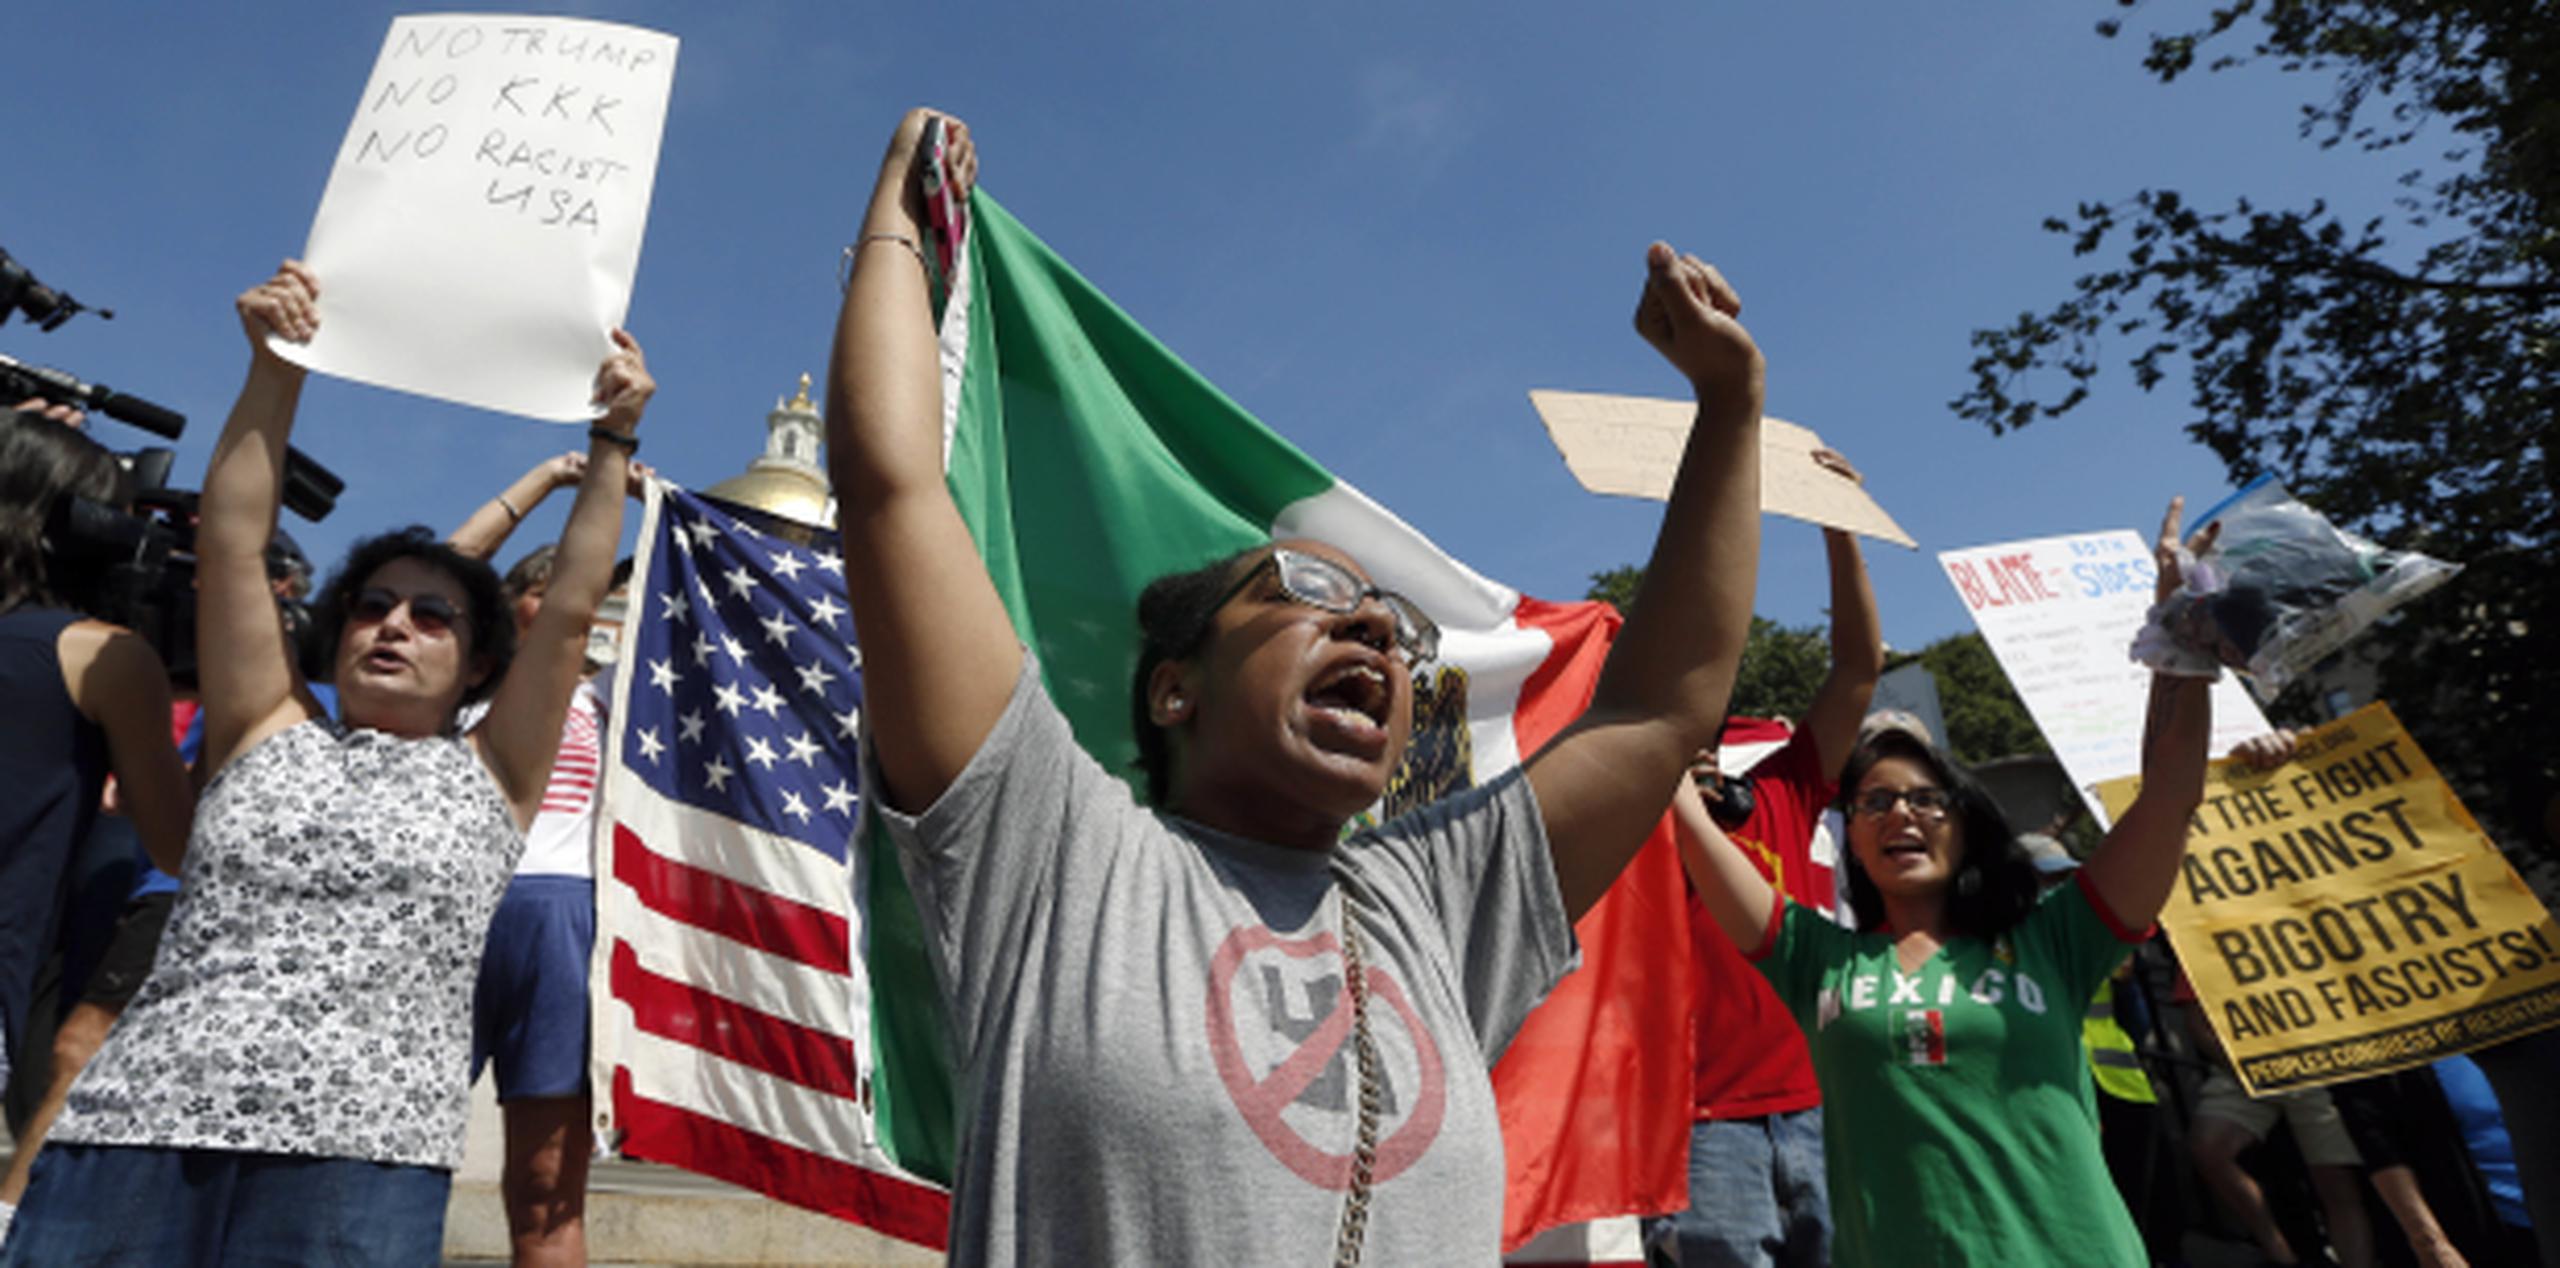 Manifestantes opositores cantan consignas durante una protesta en Boston en anticipación a la llamada manifestación “Manifestación pro Libertad de Expresión” organizada por grupos conservadores. (AP/Michael Dwyer)
